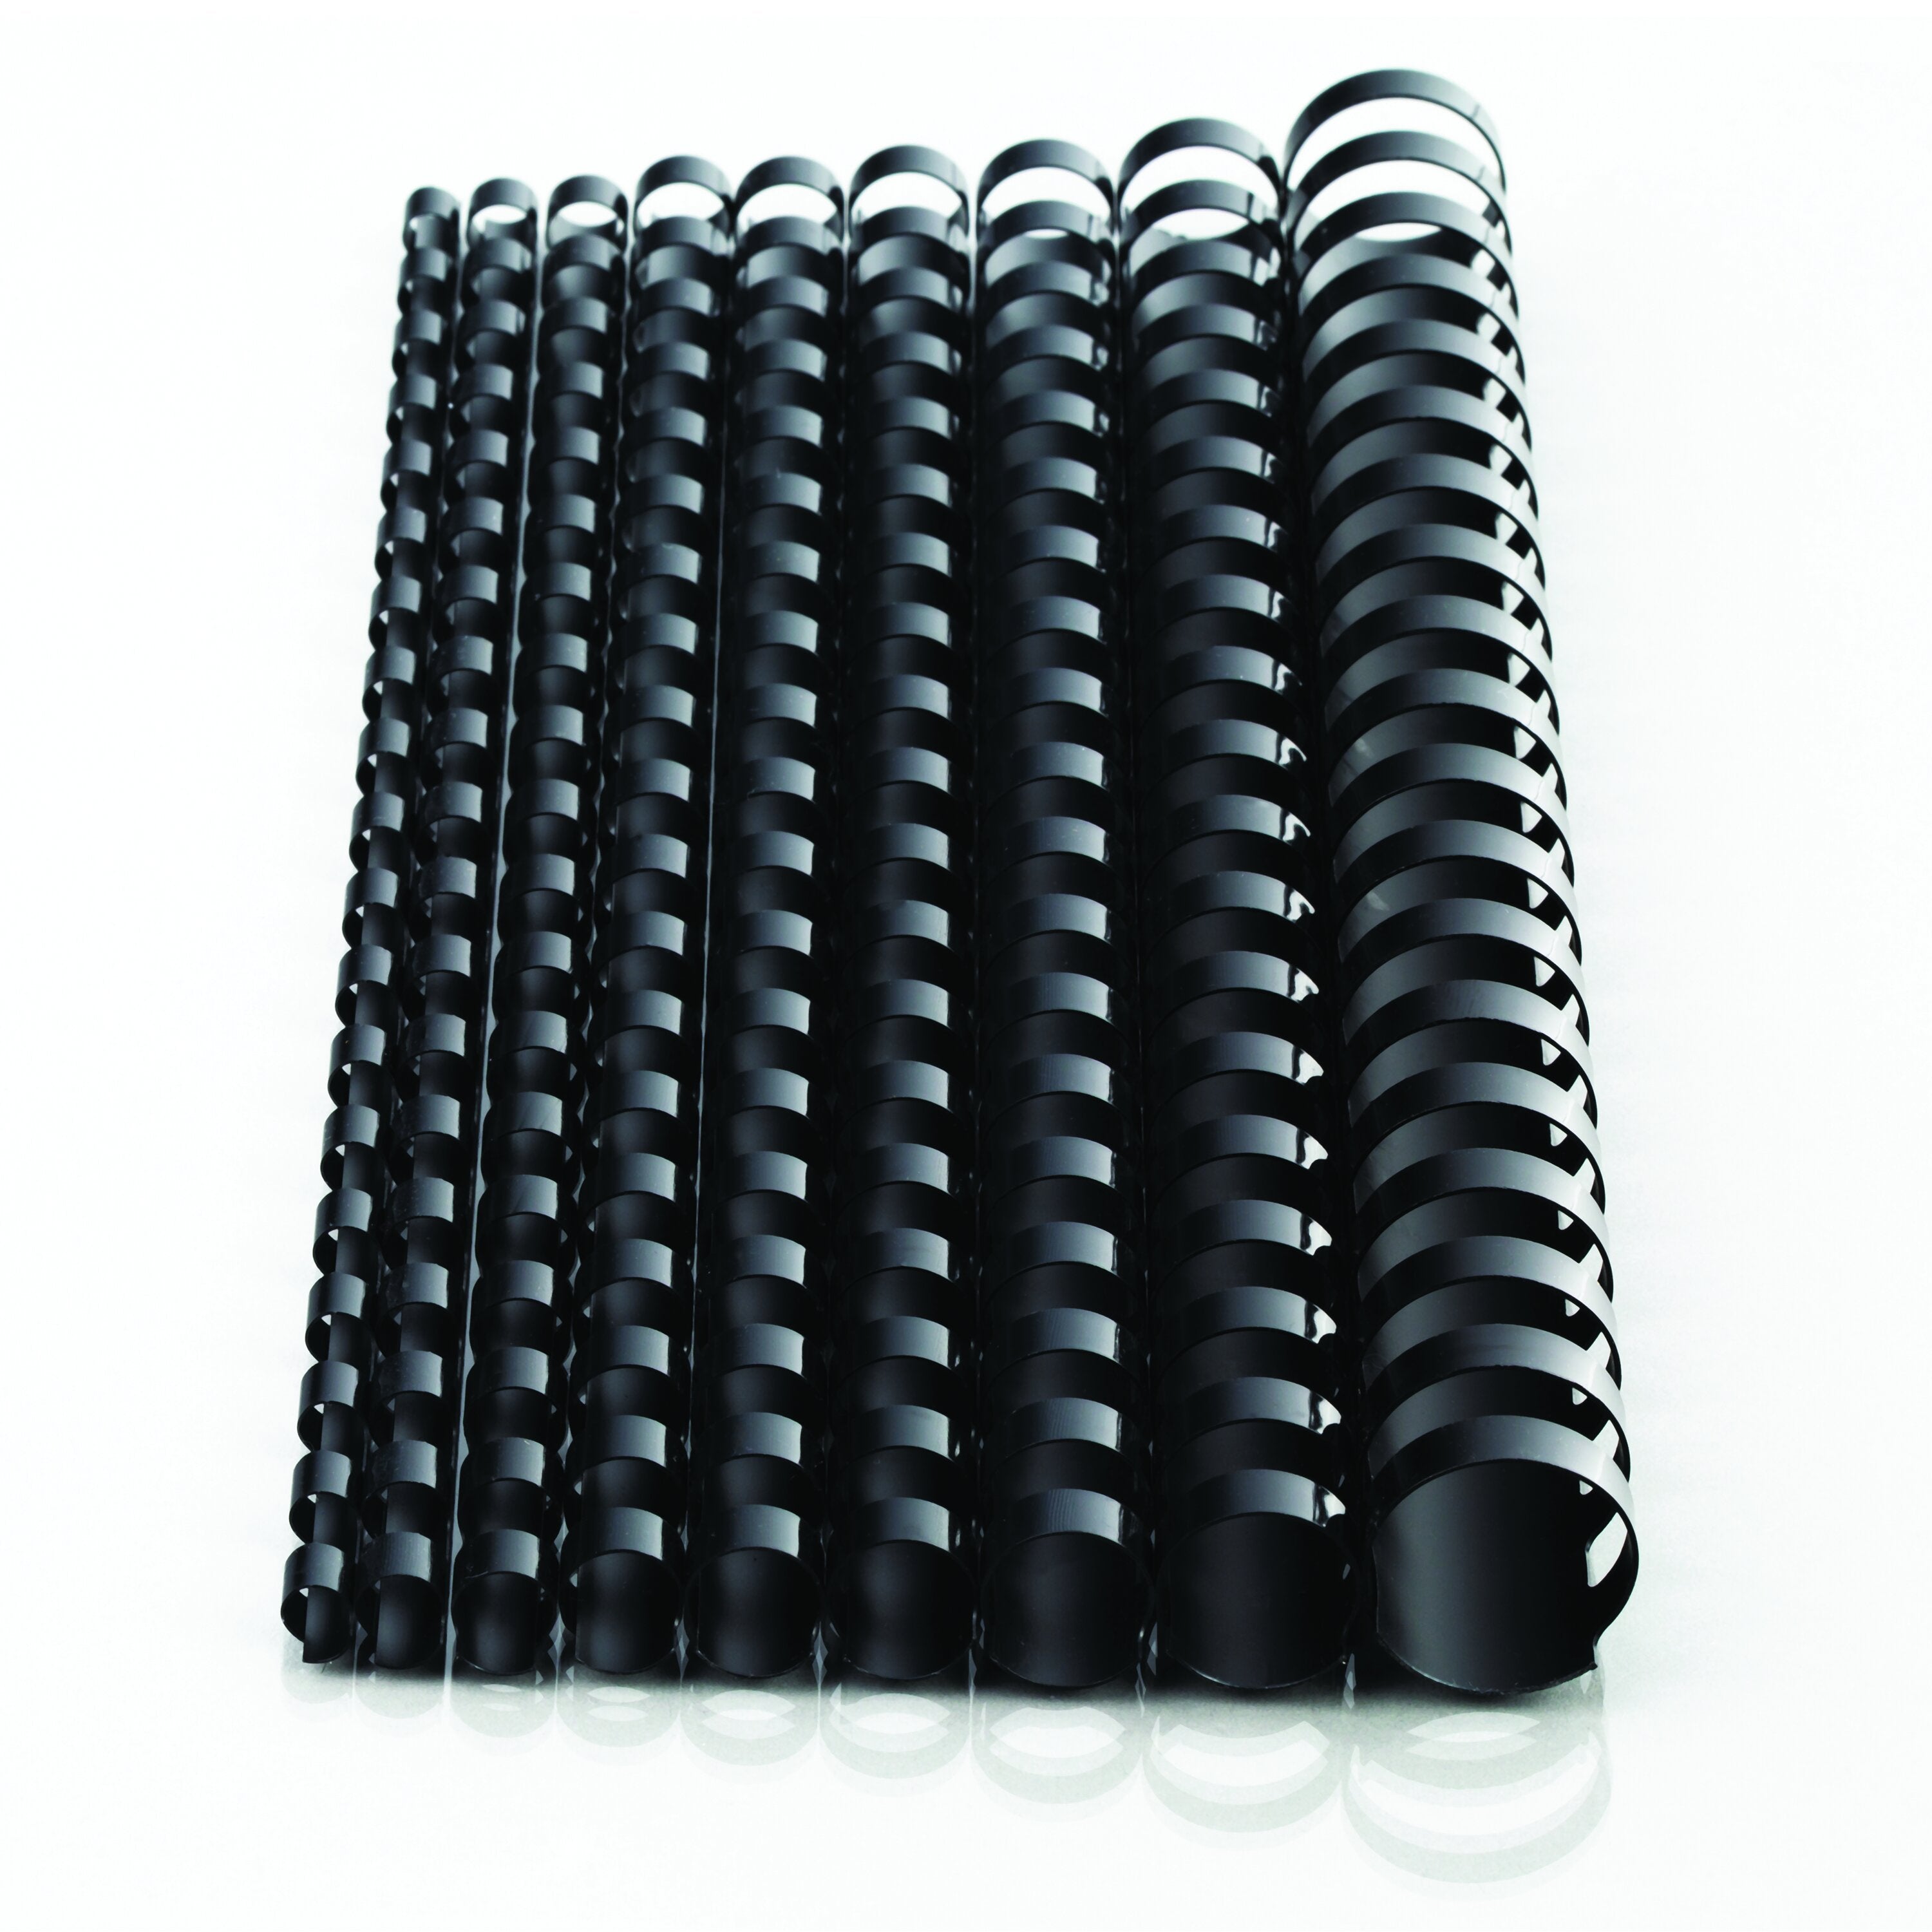 Mead CombBind 1/4" Black Binding Spines, 125 Pack